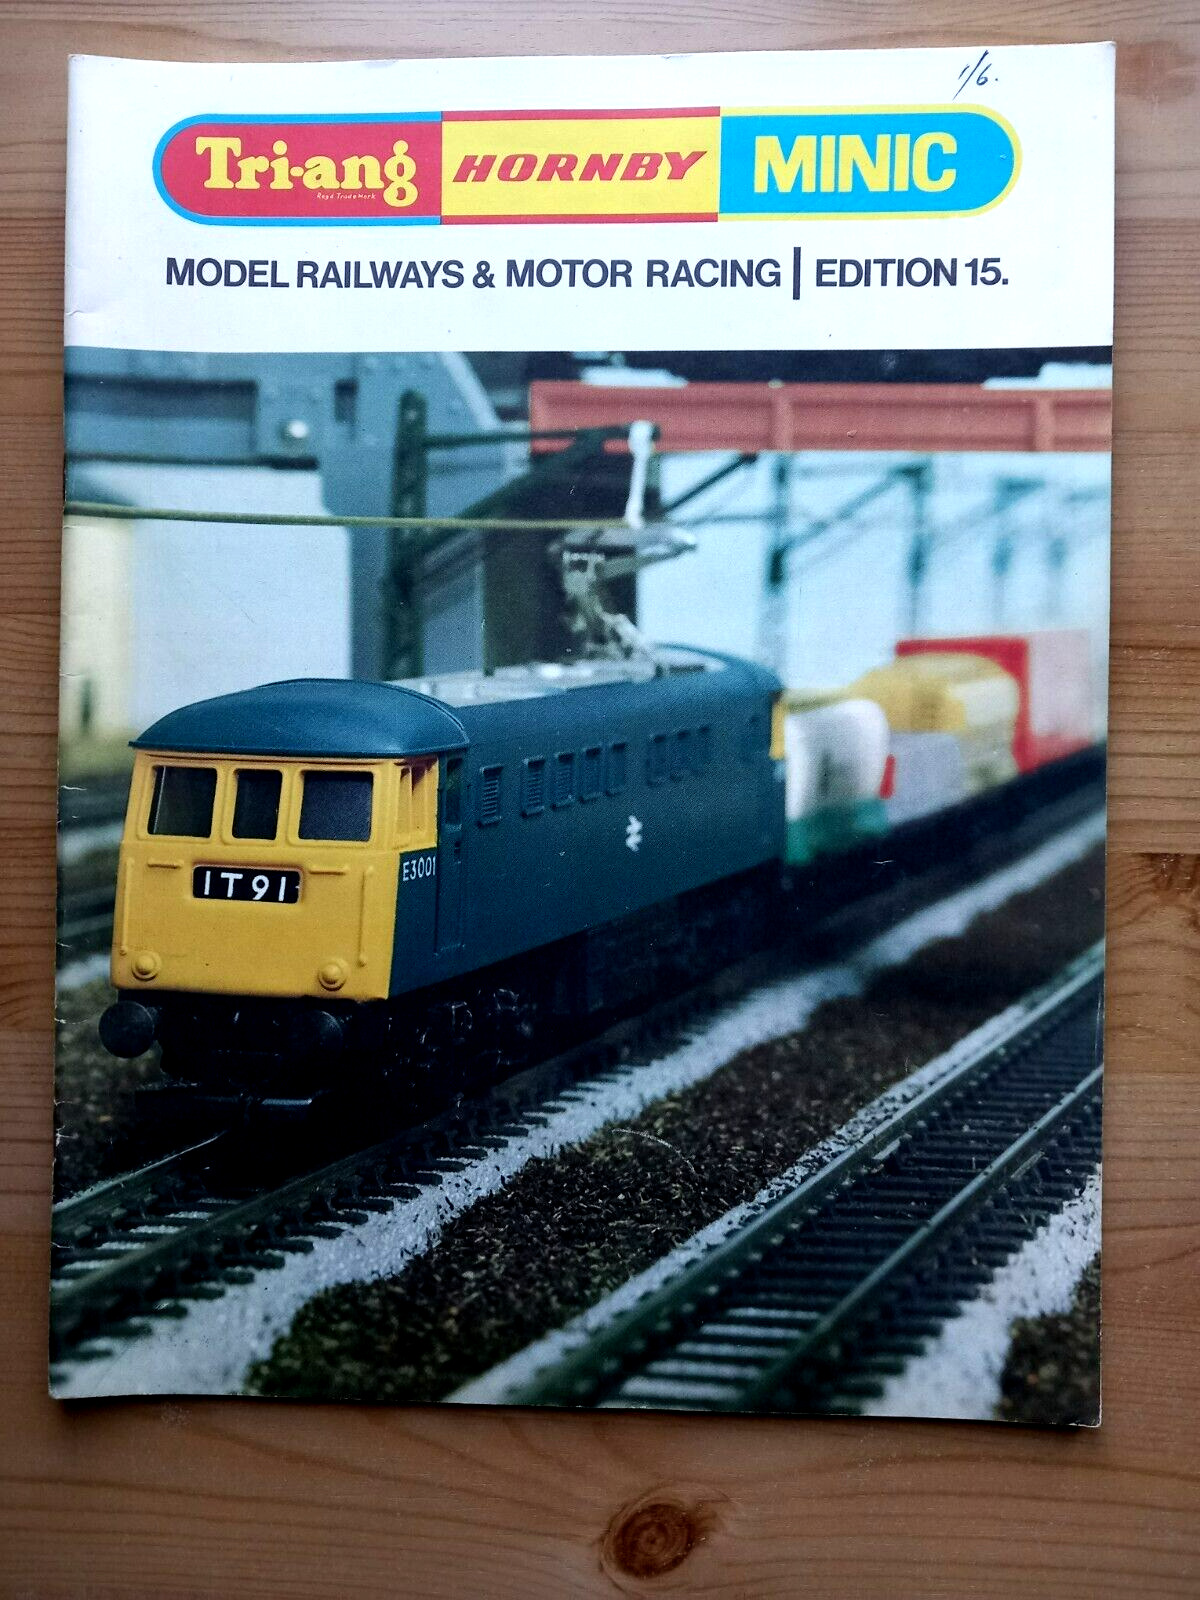 Tri-ang Hornby Minic Model Railways & Motor Racing /Edition 15 1969 Catalogue.